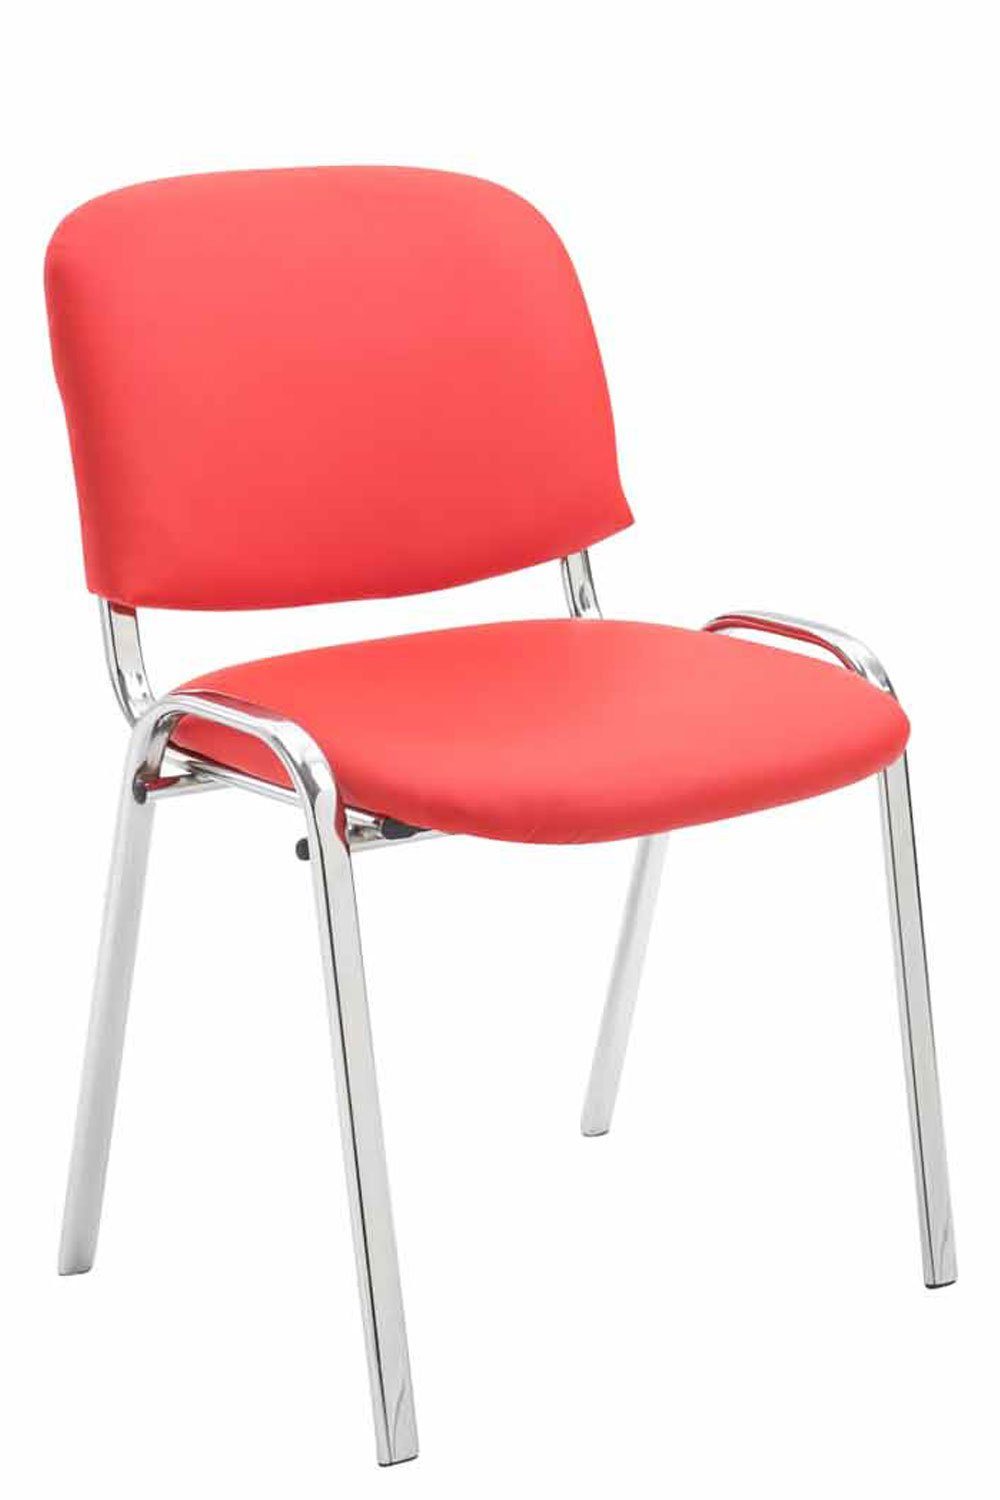 TPFLiving Besucherstuhl Keen mit hochwertiger Polsterung - Konferenzstuhl (Besprechungsstuhl - Warteraumstuhl - Messestuhl), Gestell: Metall chrom - Sitzfläche: Kunstleder rot